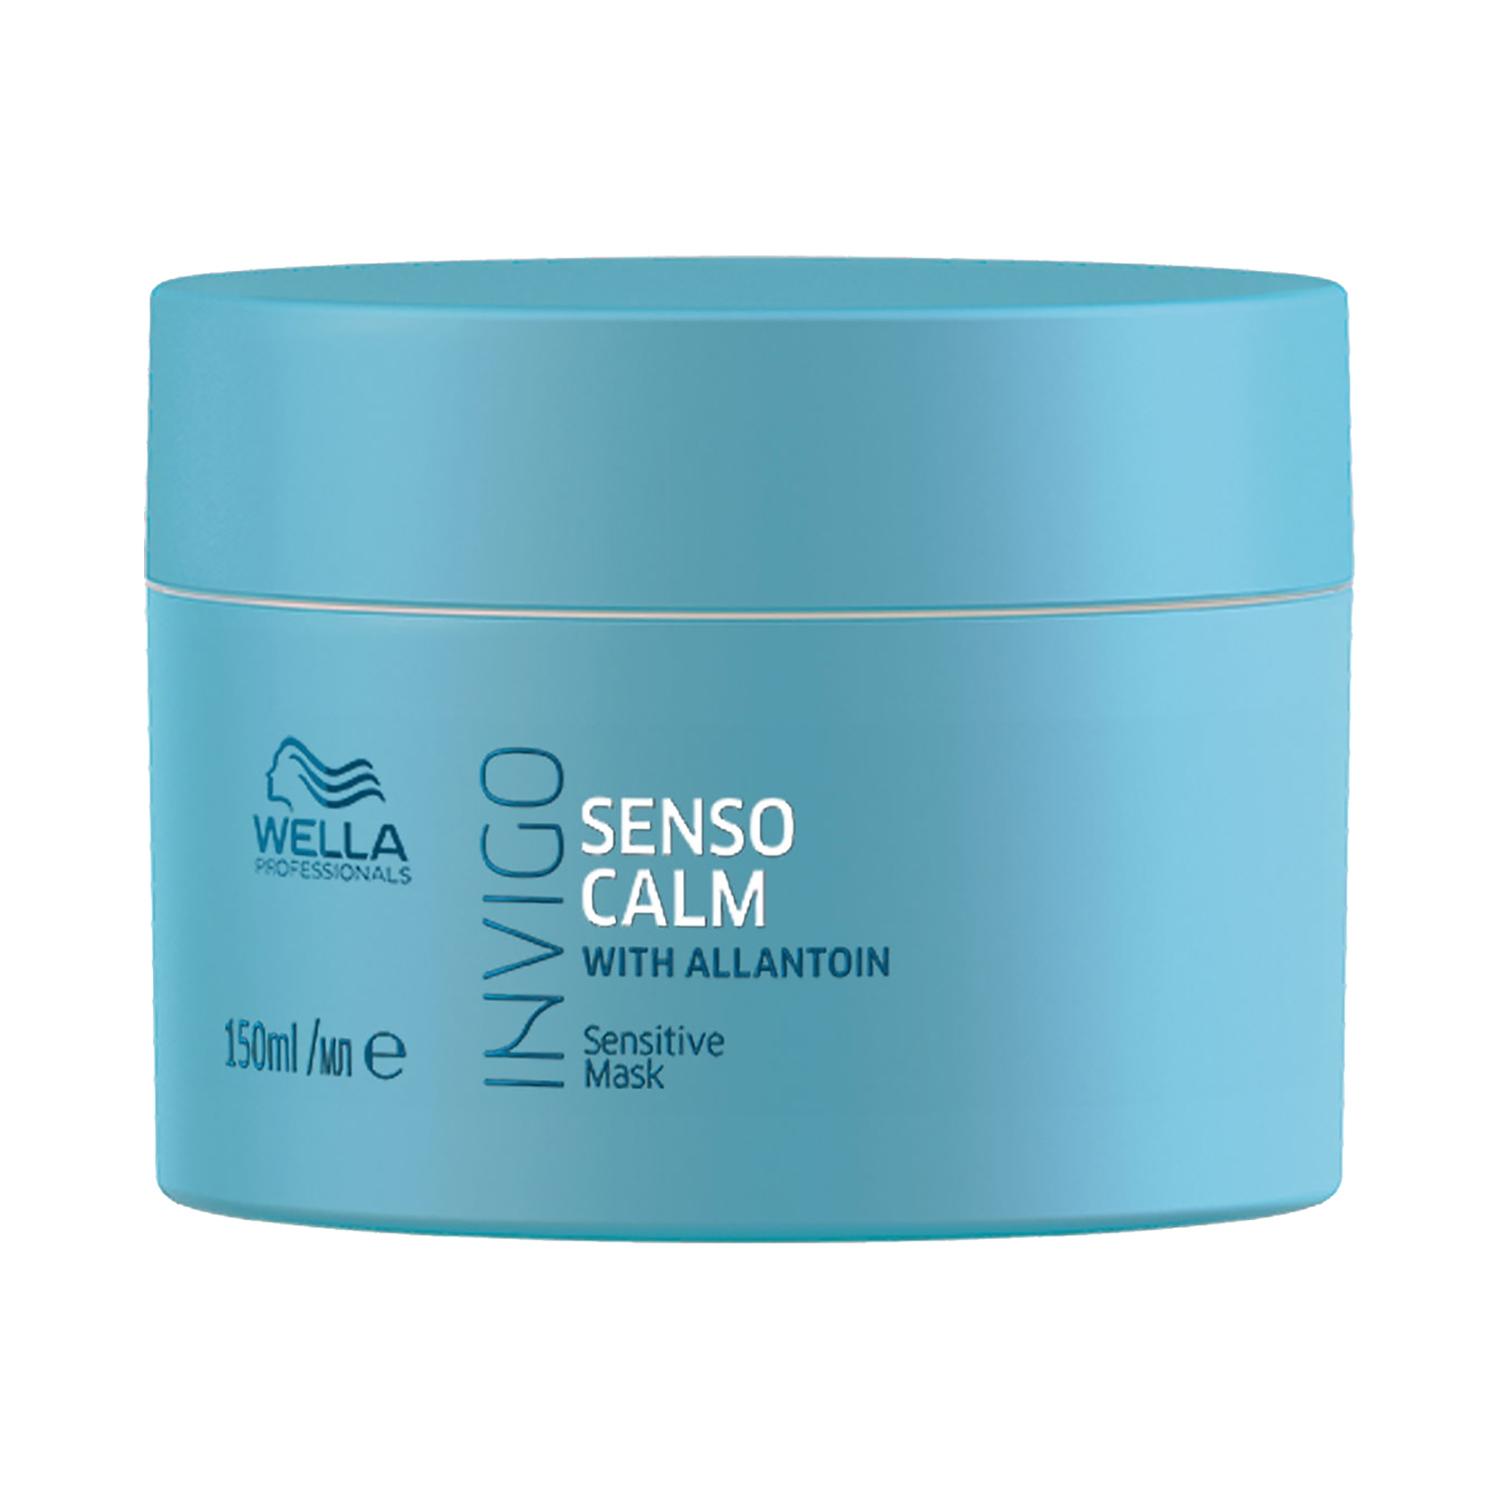 wella professionals invigo balance senso calm sensitive mask (150ml)